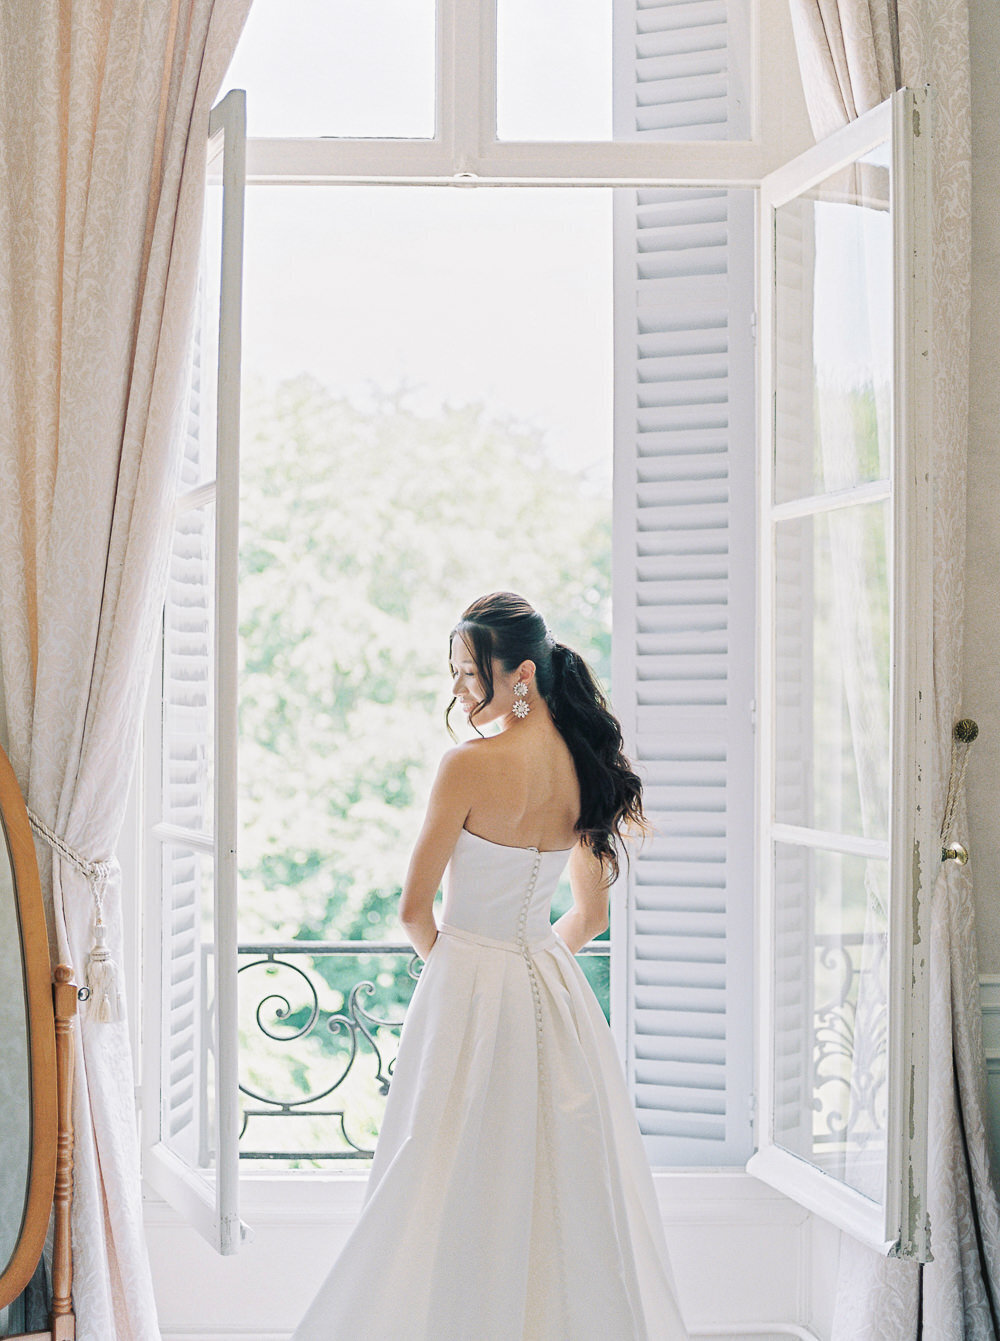 Chateau de Santeny paris wedding | Juno photo paris wedding photographer